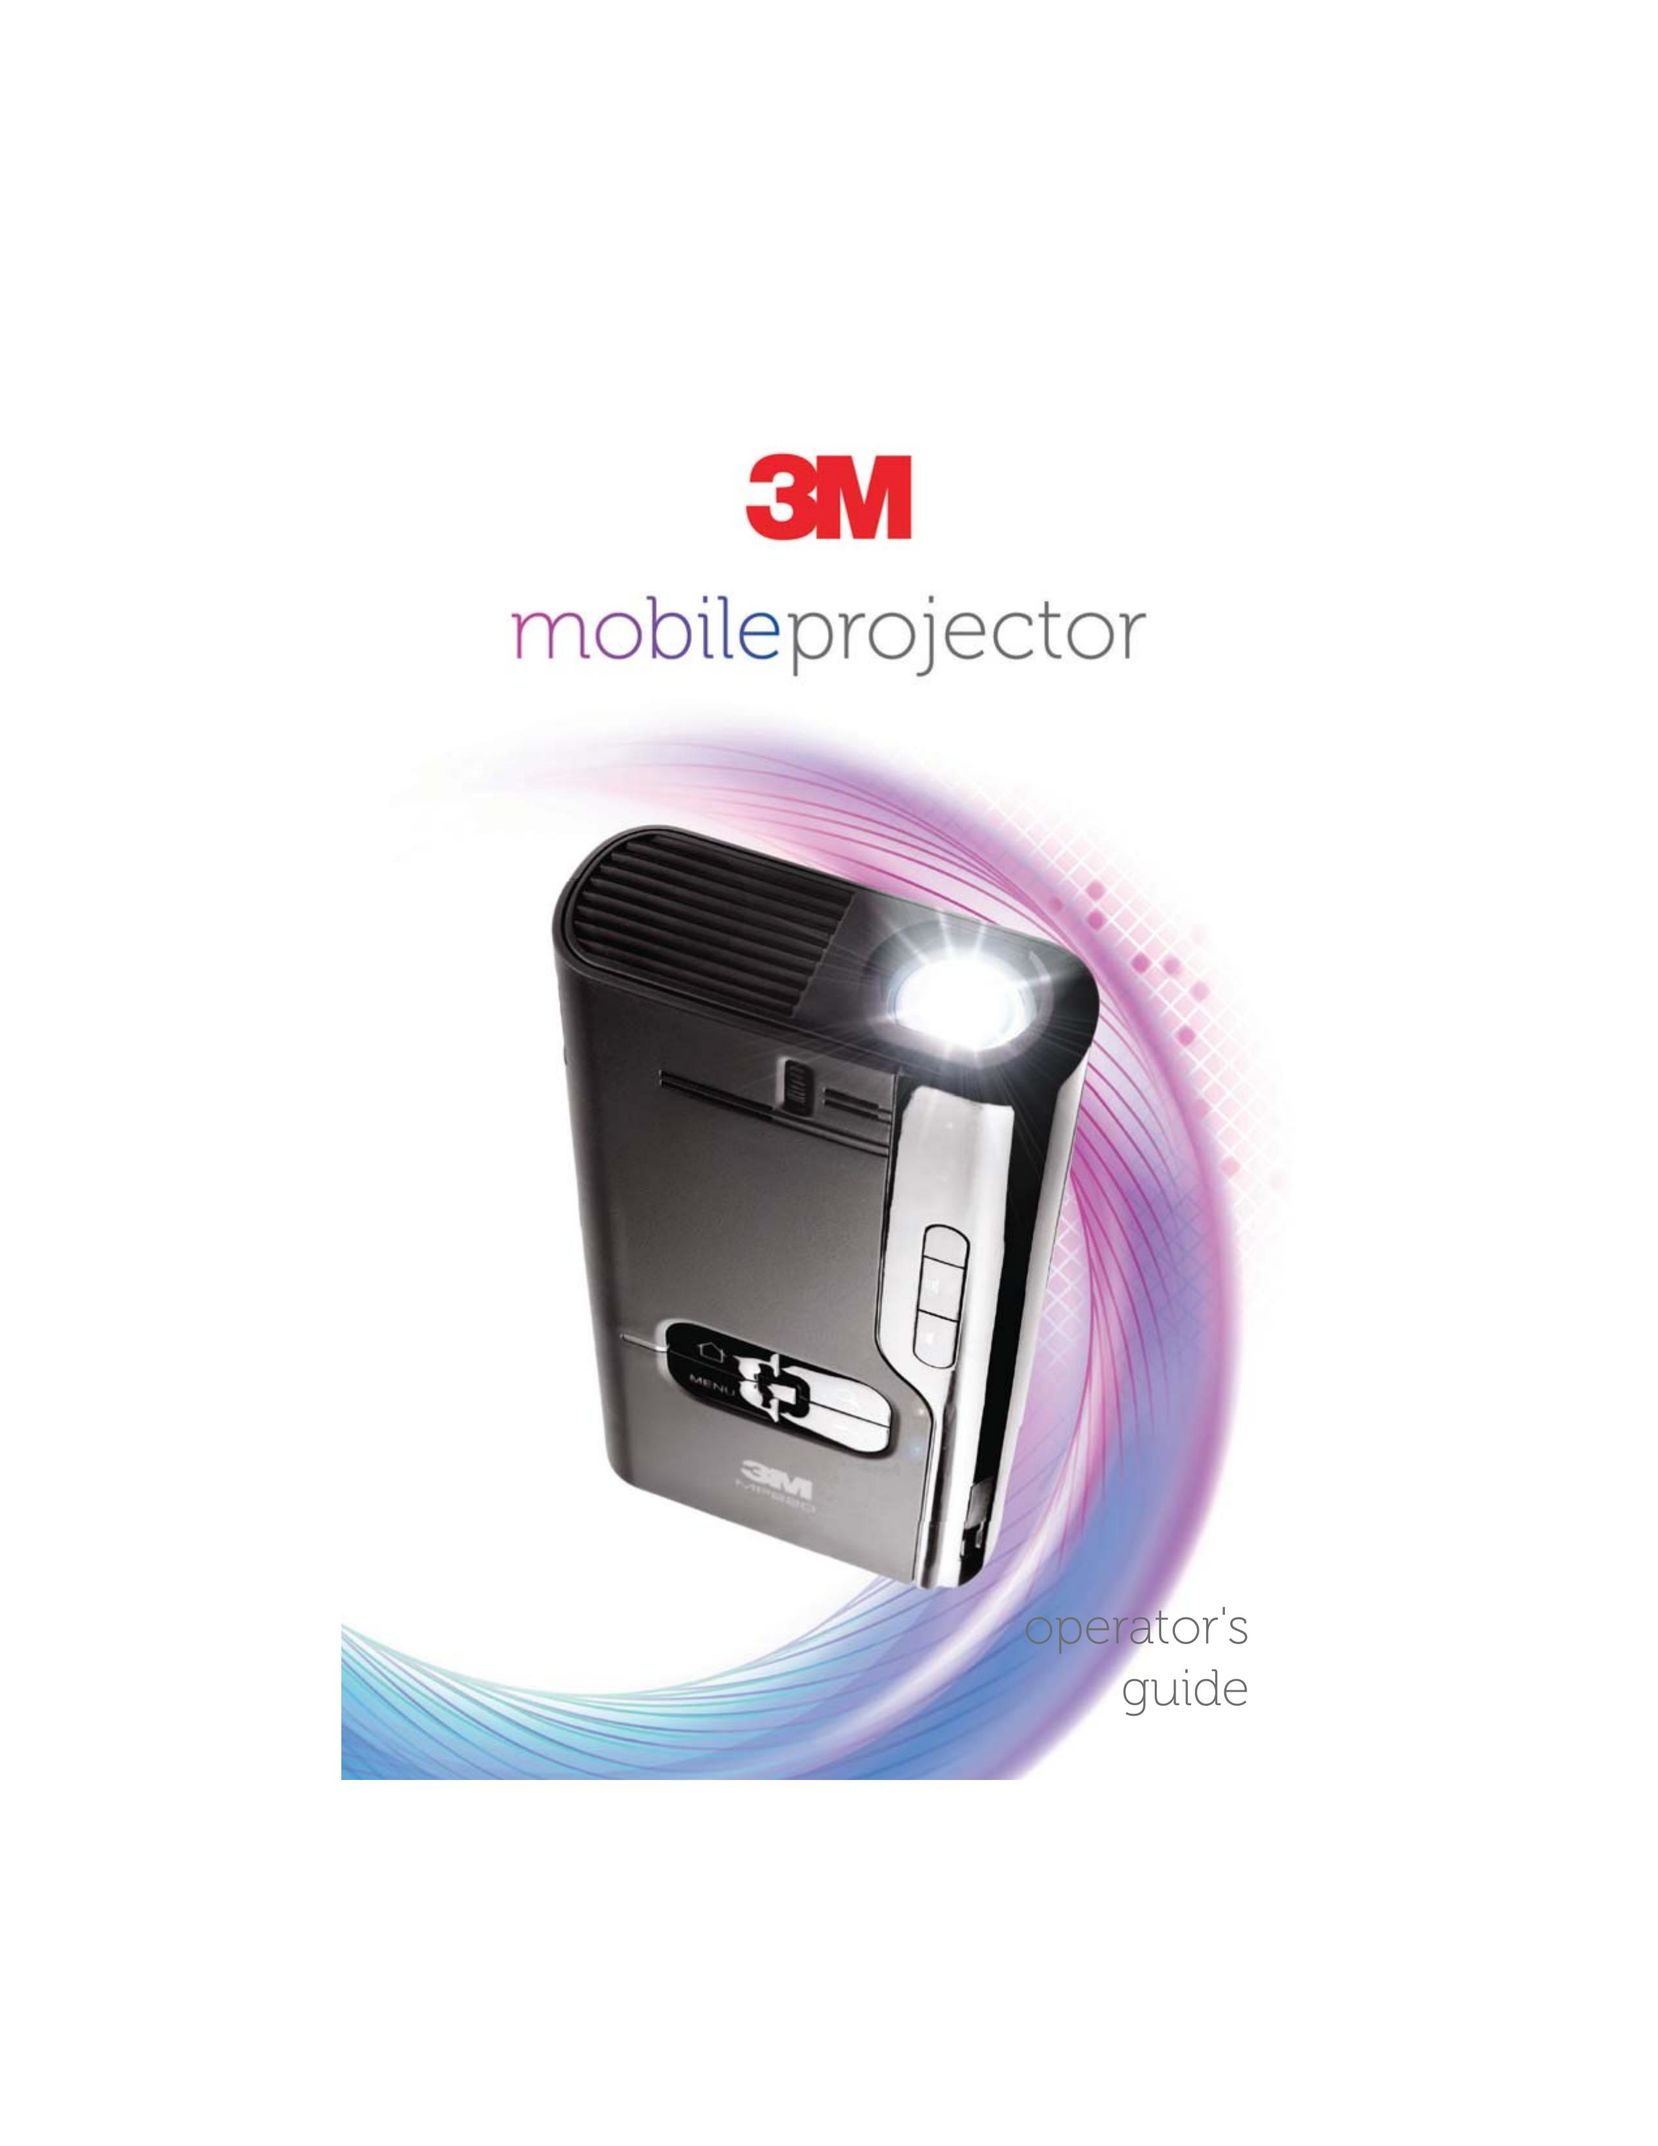 3M MP220 Projector User Manual